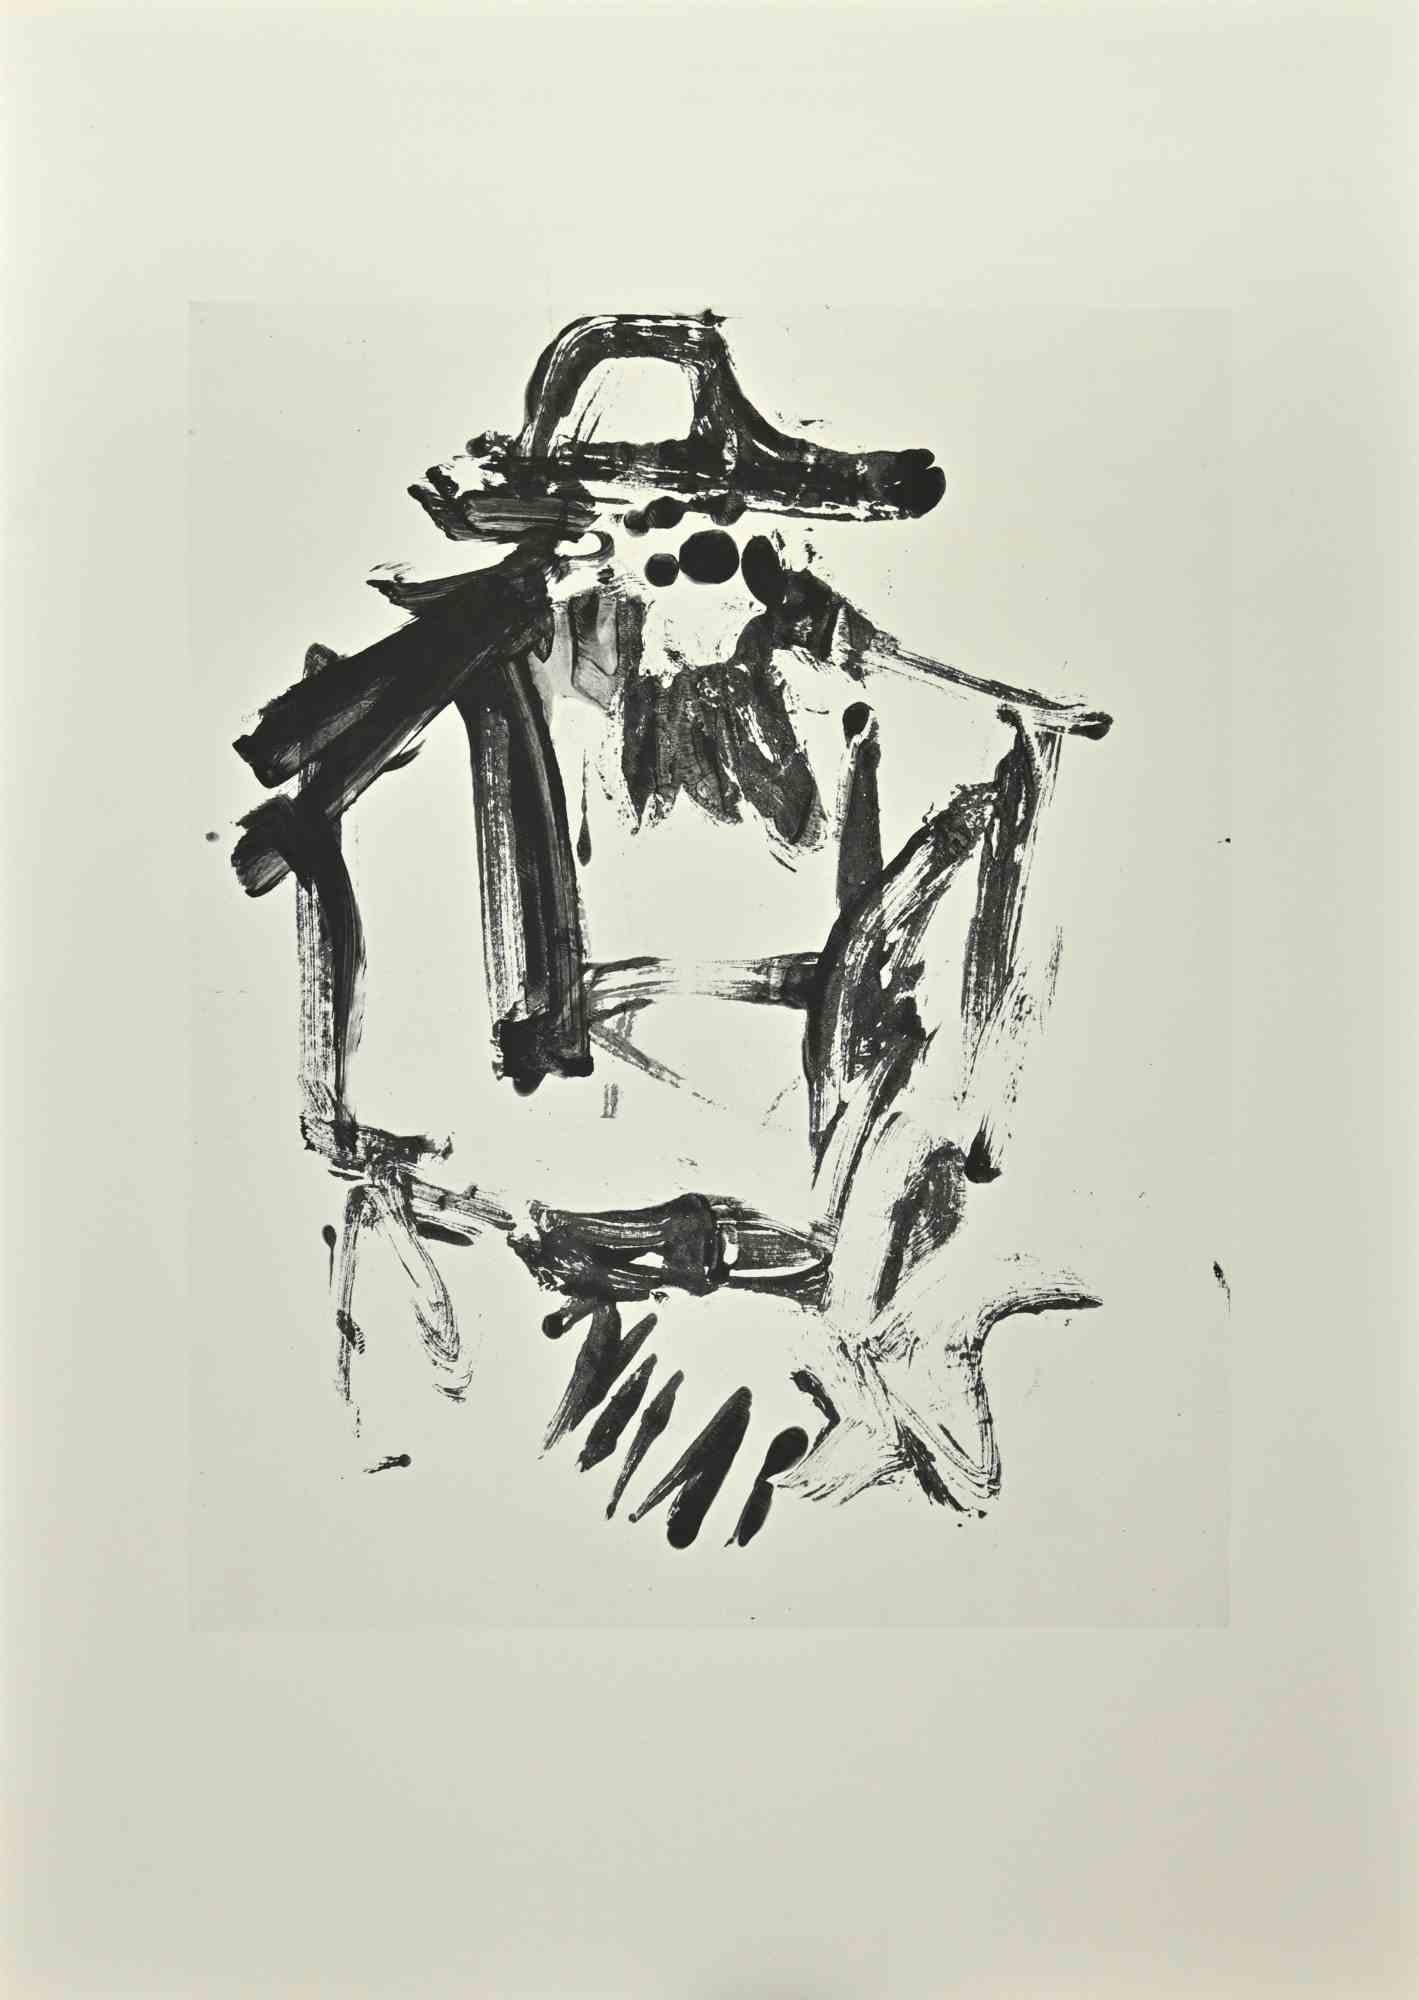 Willem de Kooning Abstract Print - Man - Offset and Lithograph after Willem De Kooning - 1985